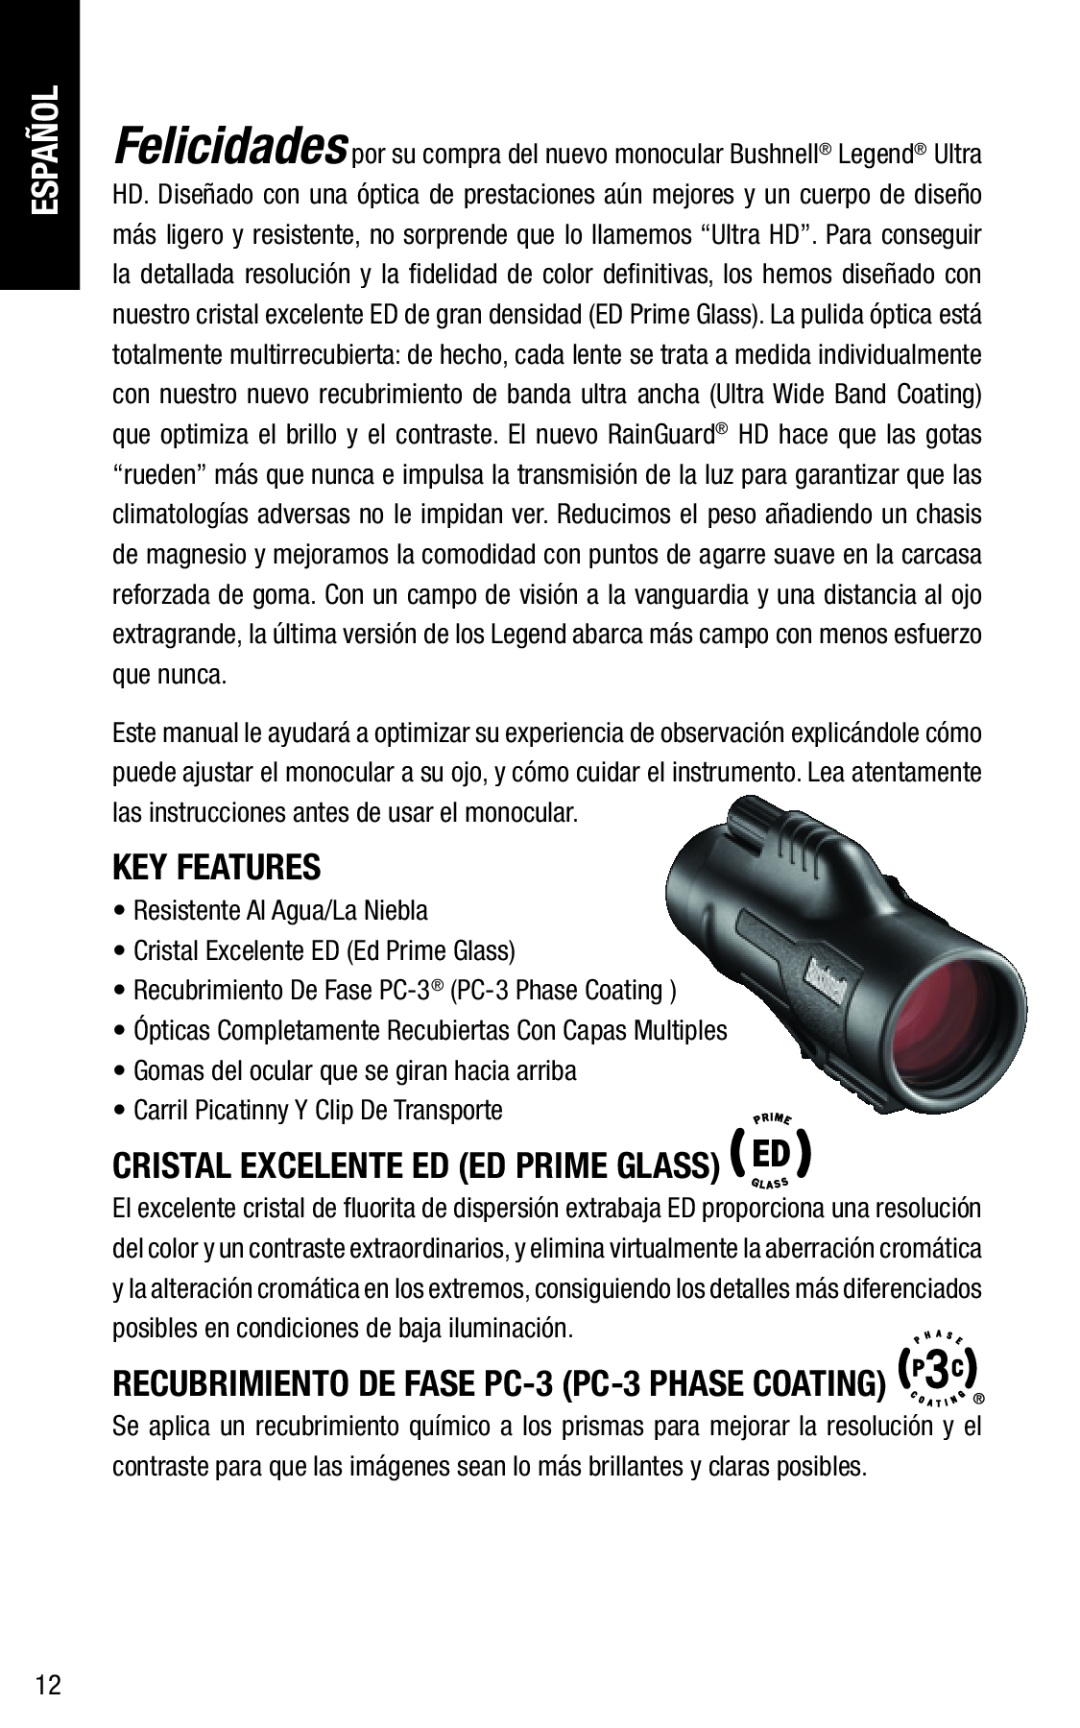 Bushnell 191144 Español, Cristal Excelente Ed Ed Prime Glass Ed, RECUBRIMIENTO DE FASE PC-3 PC-3 PHASE COATING 